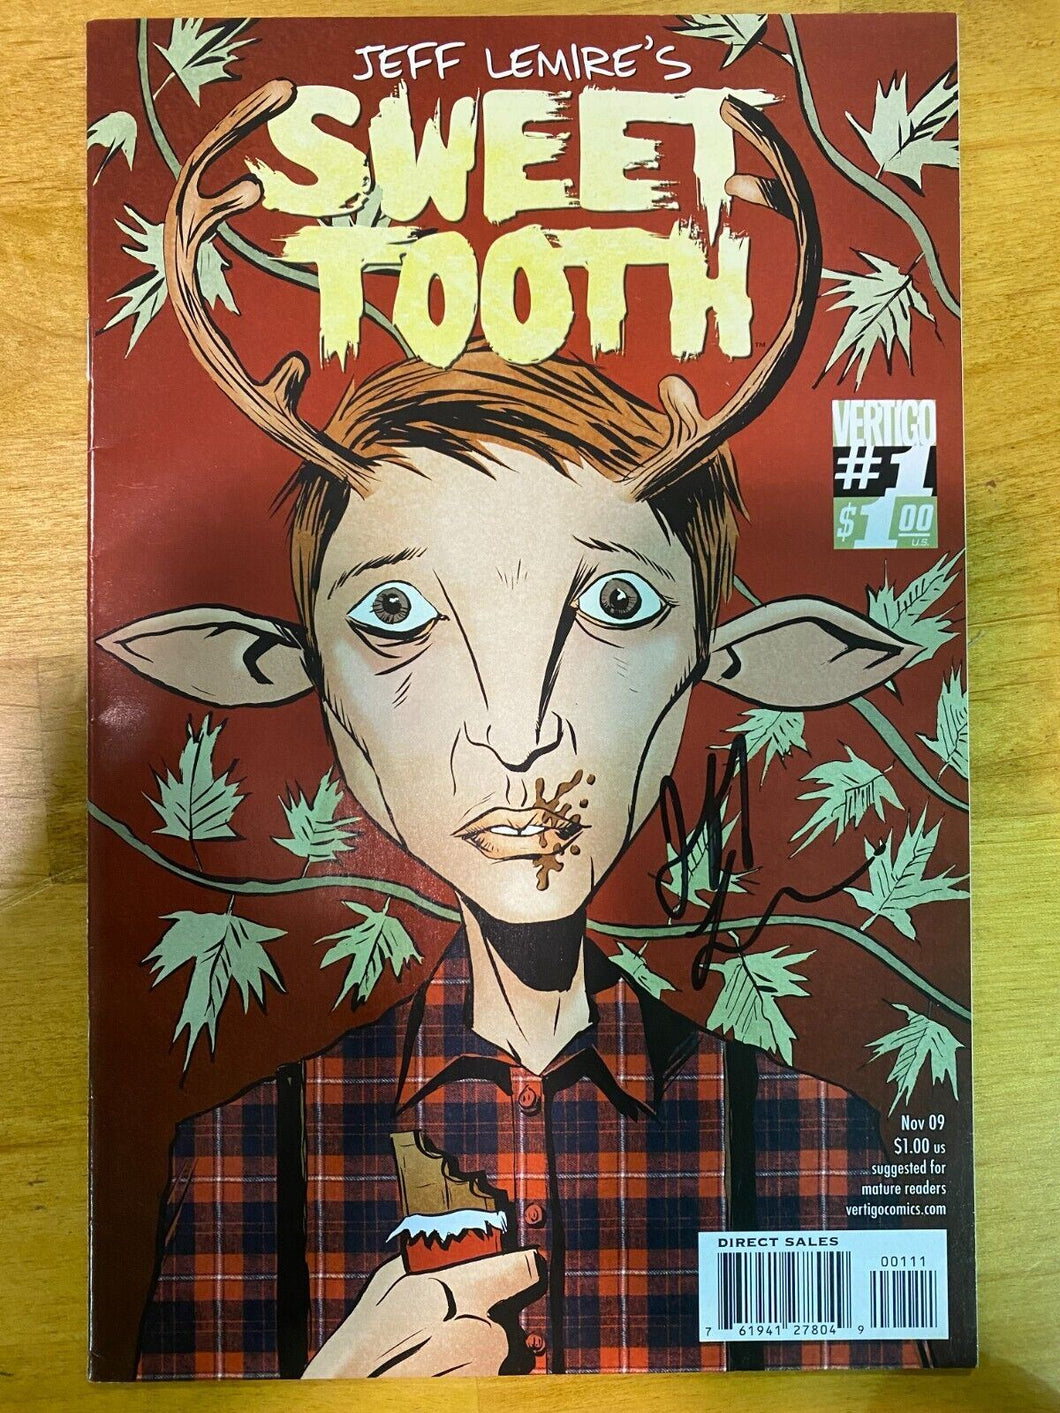 Vertigo Jeff Lemire's Sweet Tooth Issue 1 Signed by Author